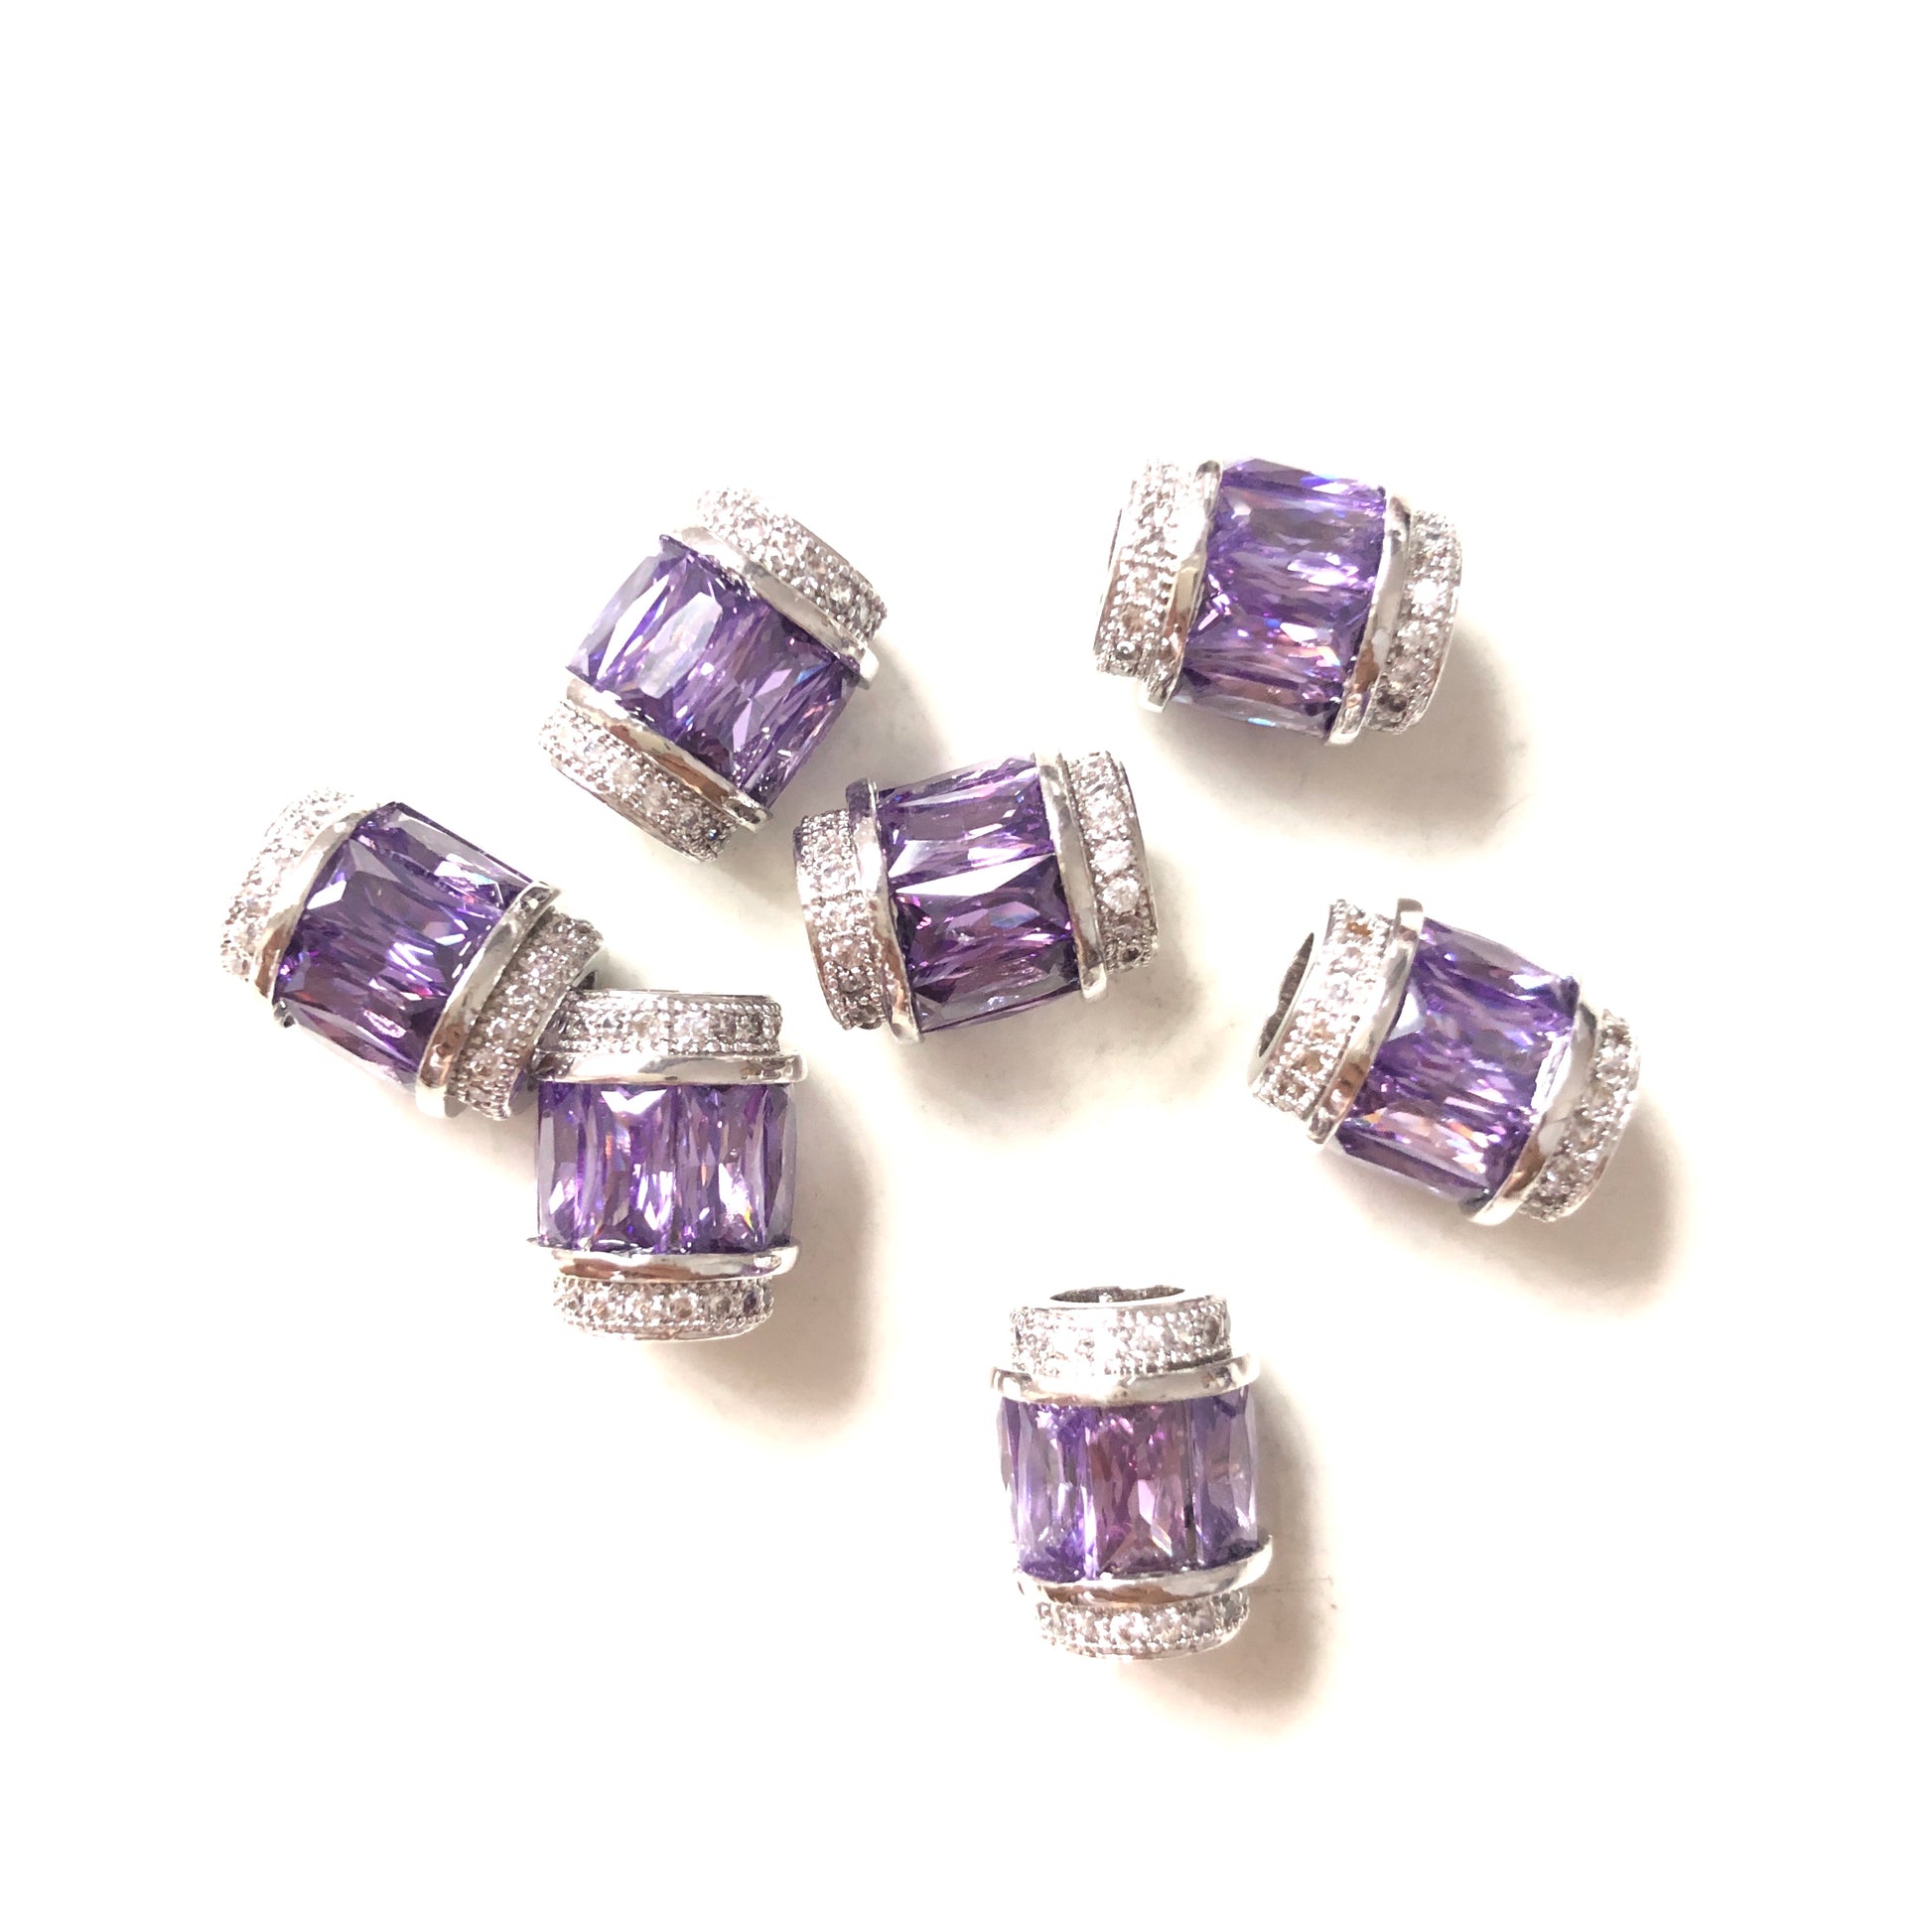 10pcs/lot 12*10mm Purple CZ Paved Big Hole Spacers Silver CZ Paved Spacers Big Hole Beads New Spacers Arrivals Charms Beads Beyond